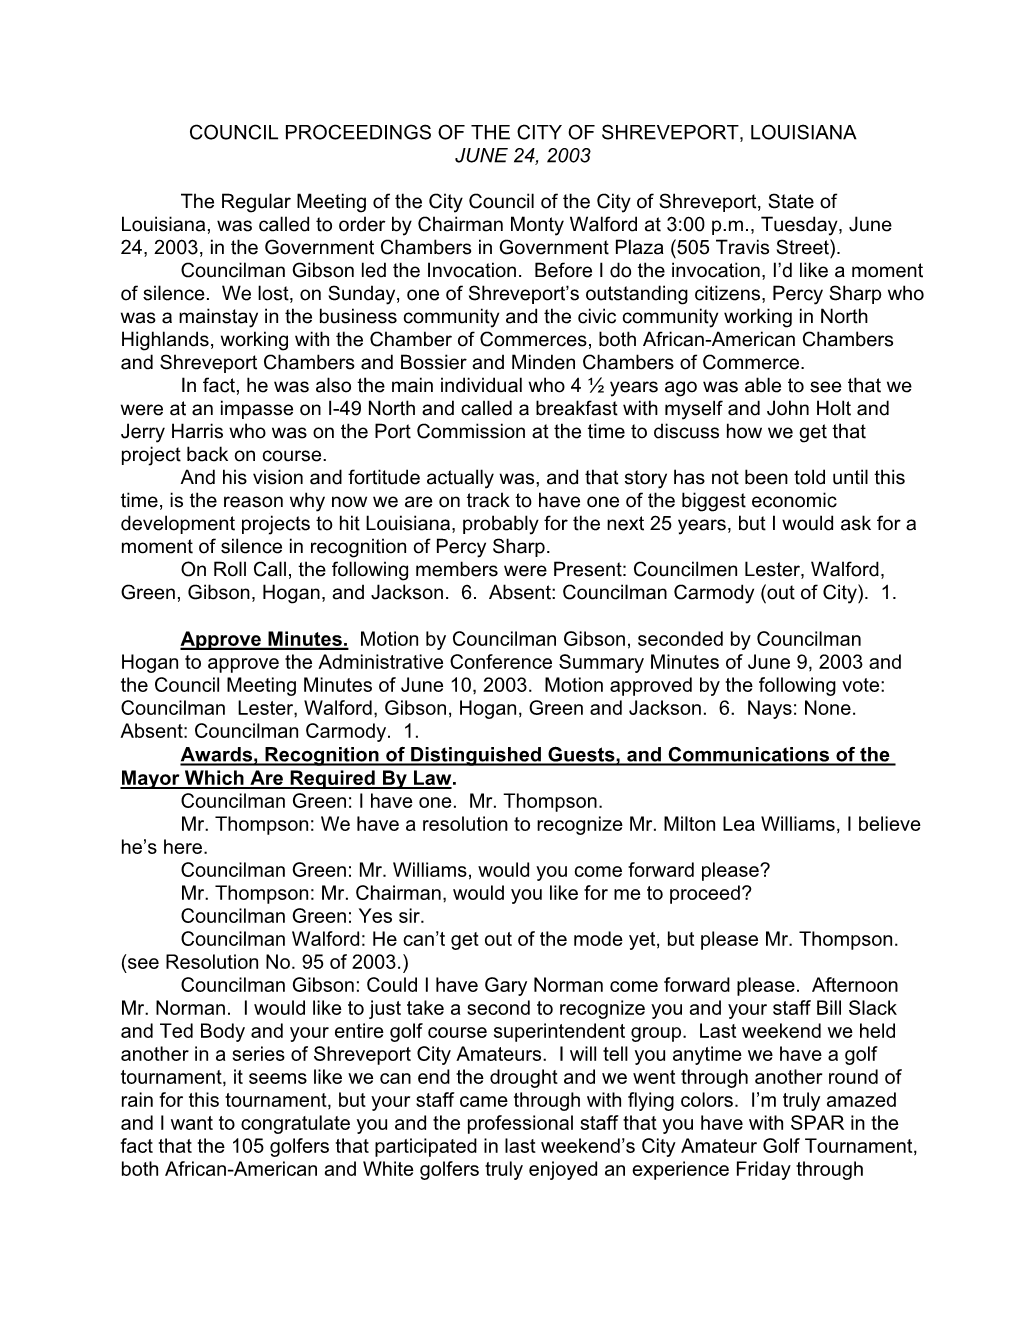 Council Proceedings of the City of Shreveport, Louisiana June 24, 2003